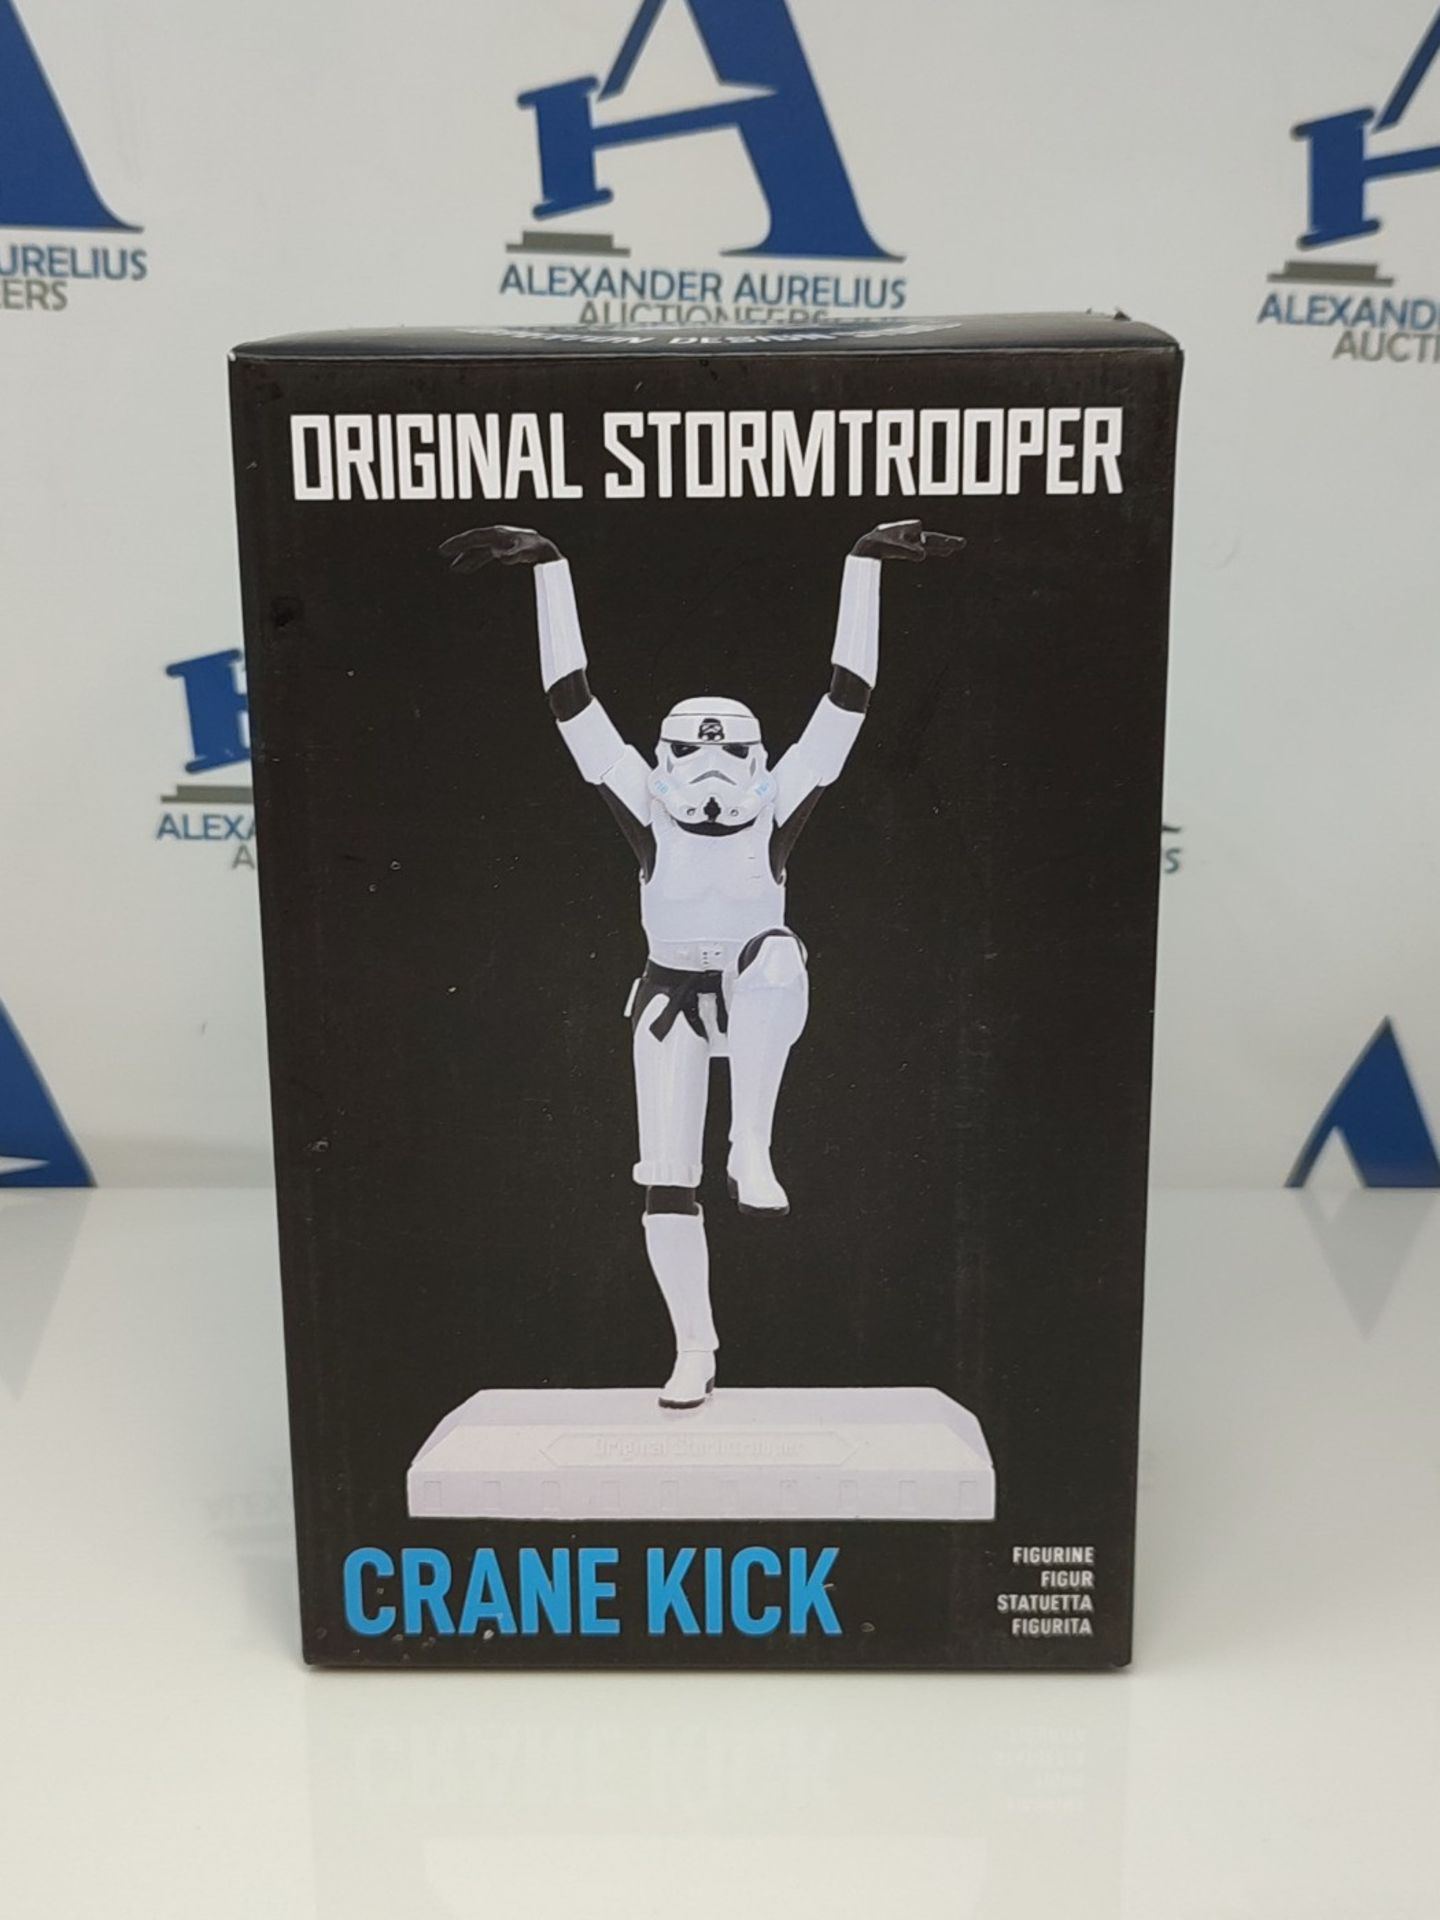 [CRACKED] Nemesis Now Stormtrooper Crane Kick - Image 2 of 3